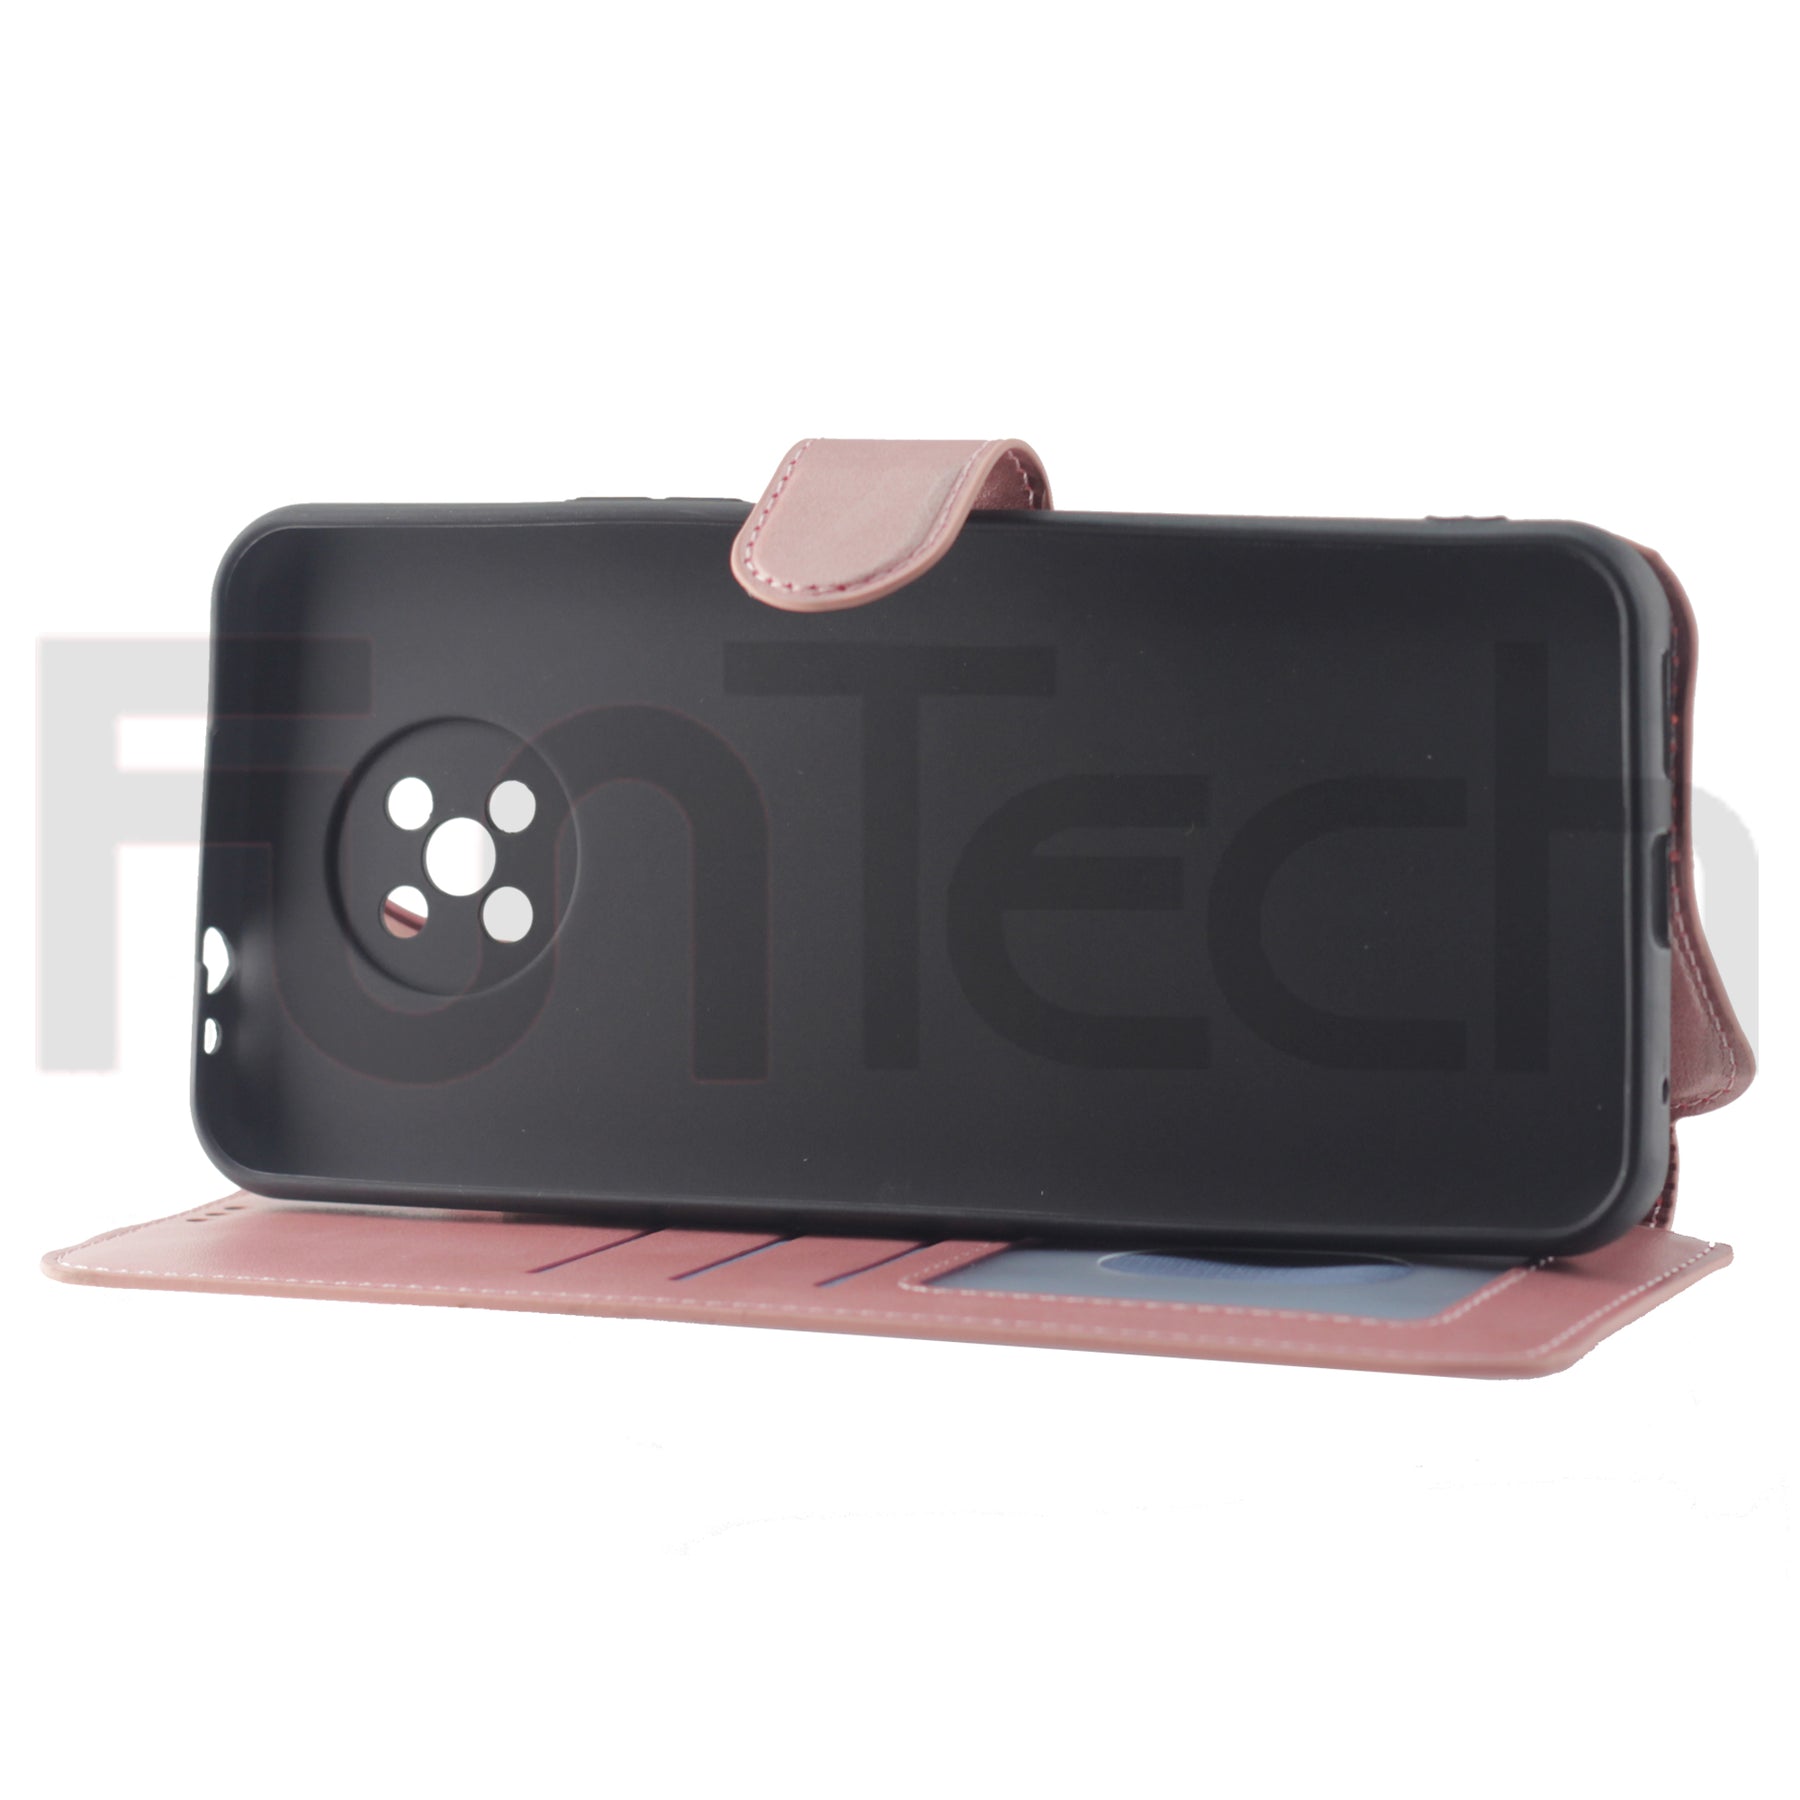 Nokia G50, Leather Wallet Case, Color Pink.